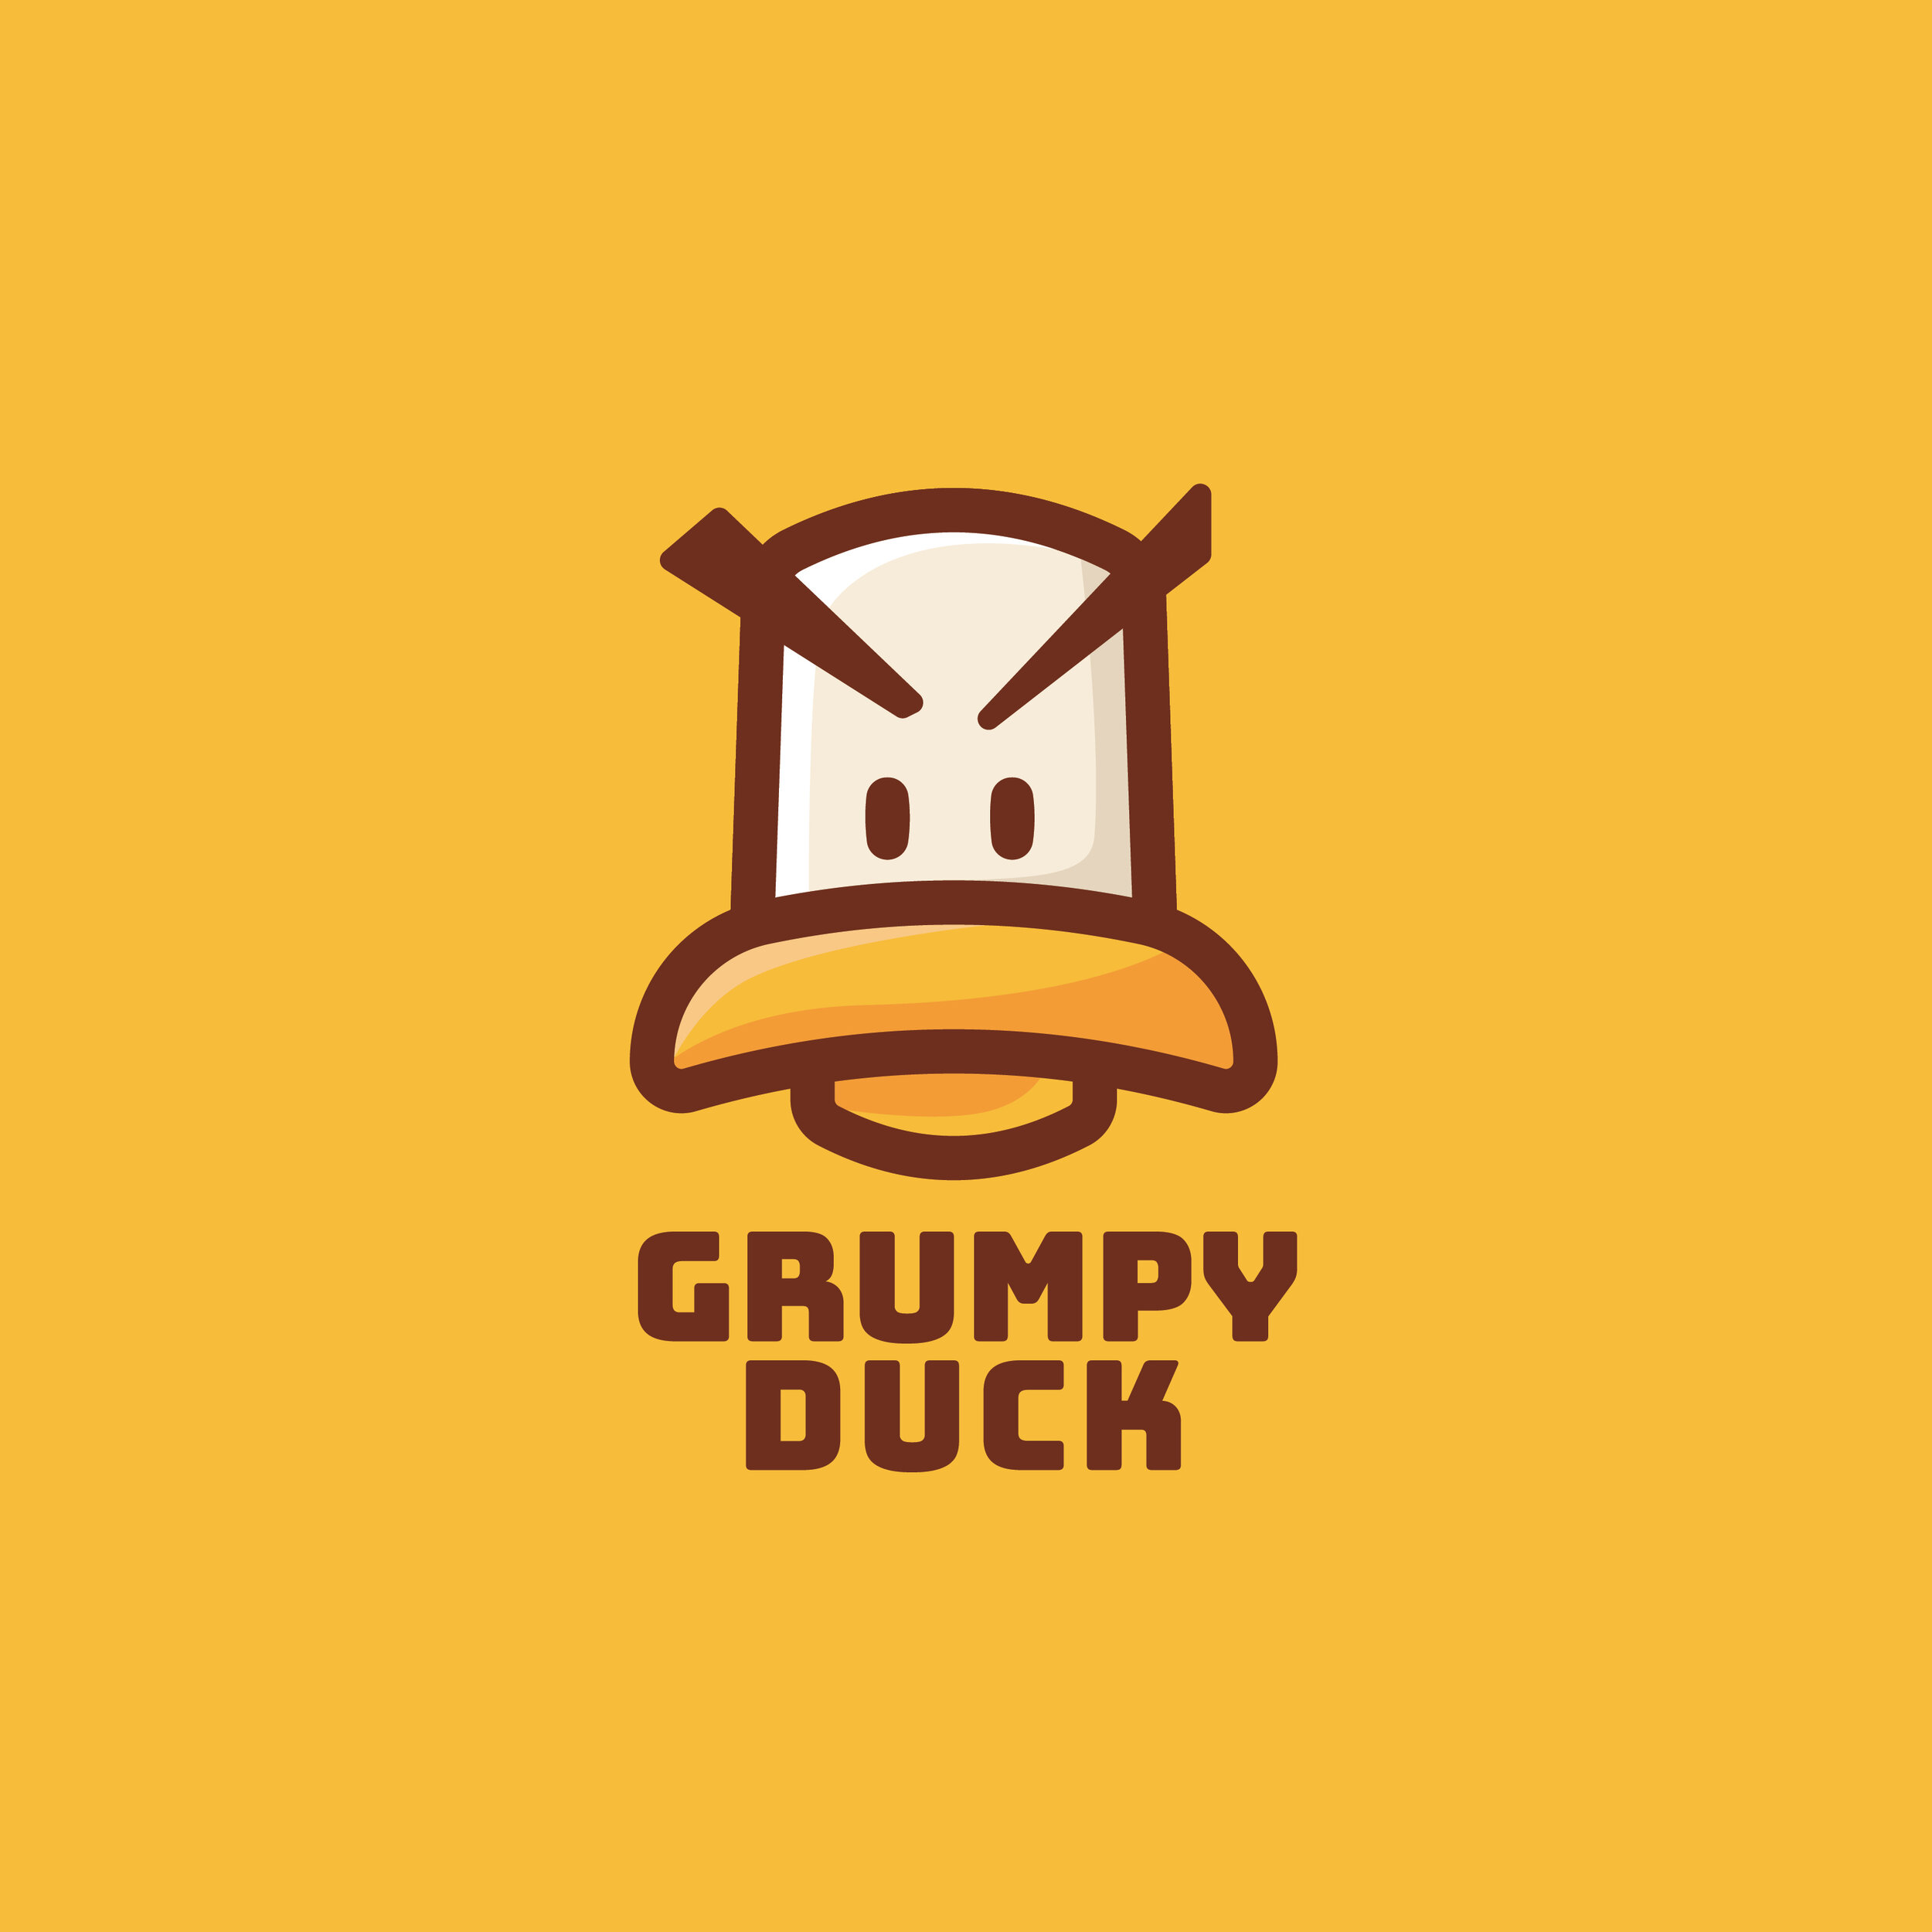 8BitDuck_GrumpyDuck_Logo_stacked-full copy.jpg